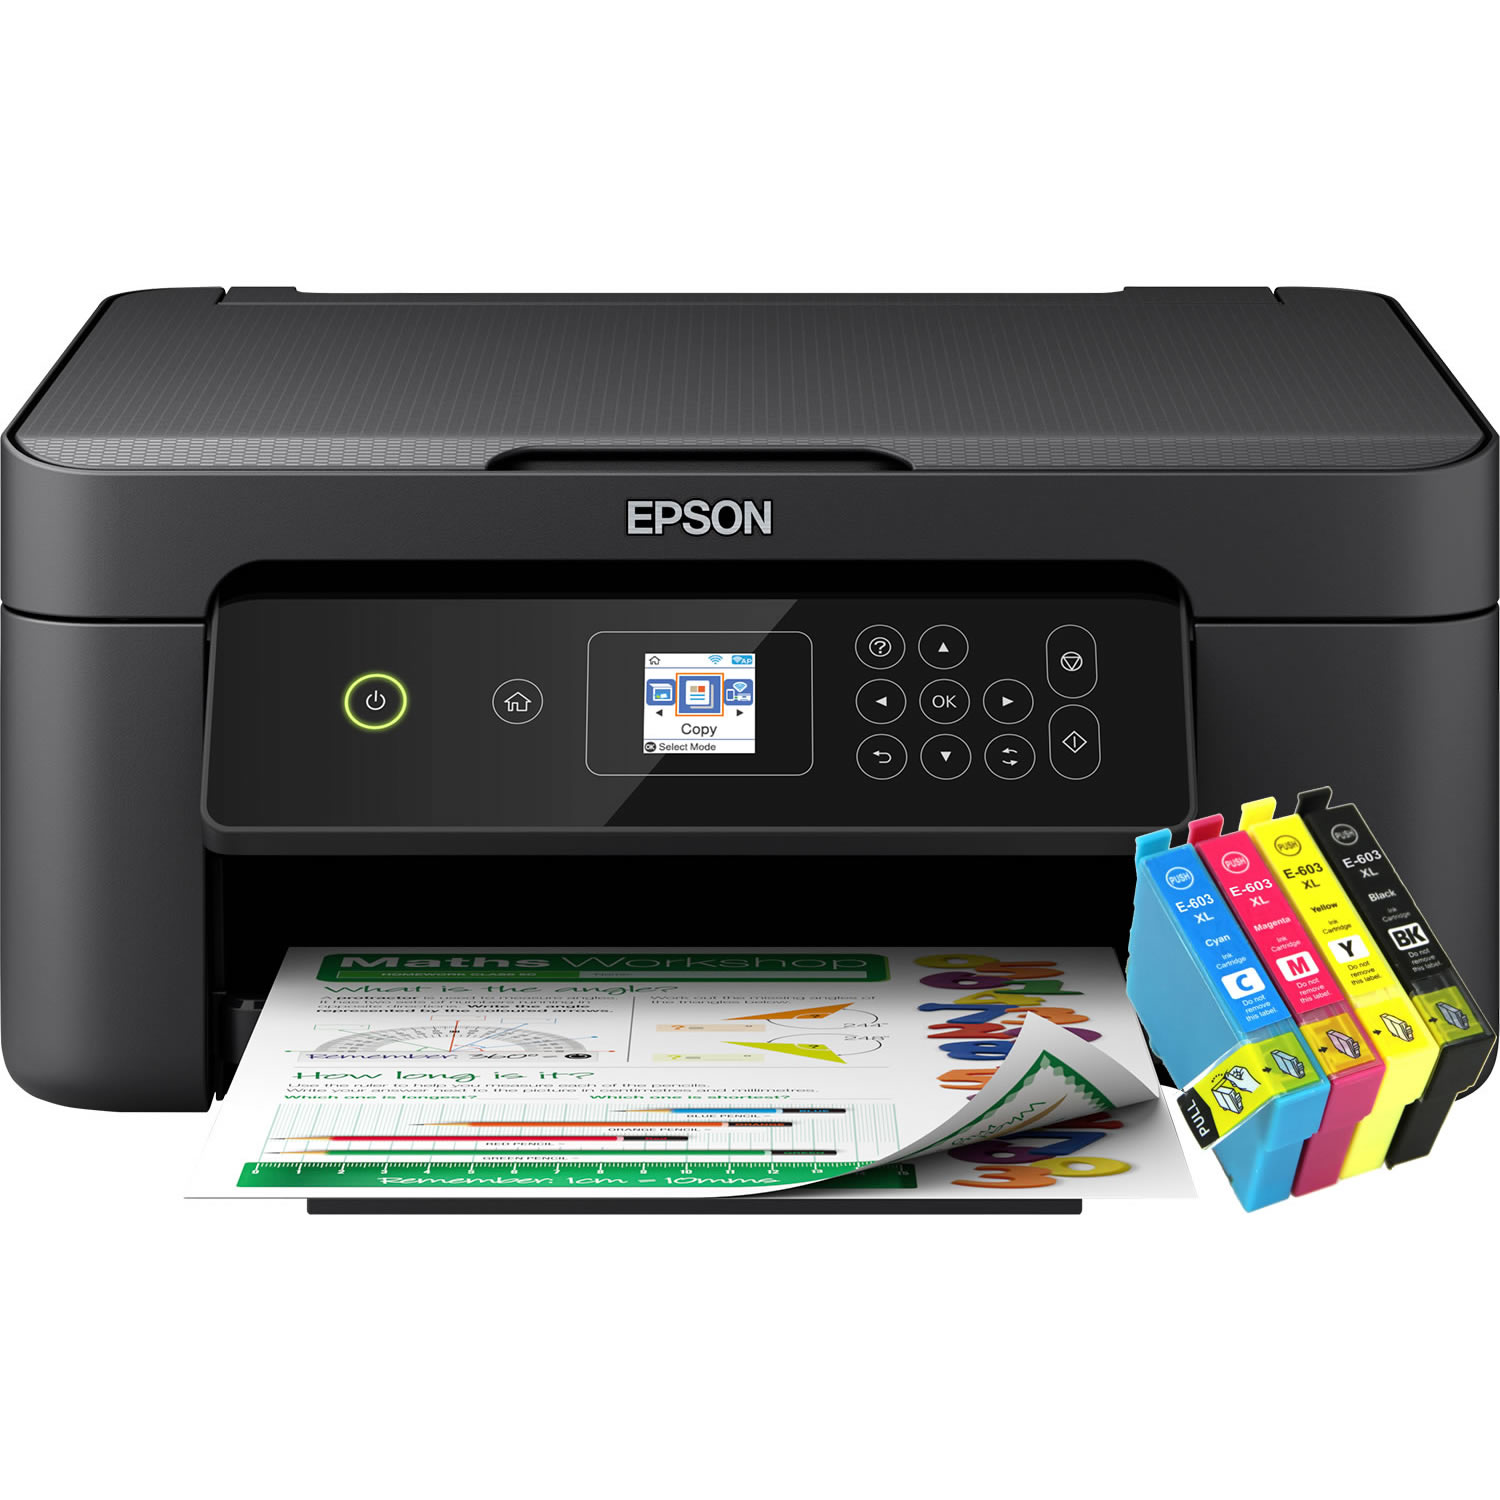 Epson XP 3100 Ink